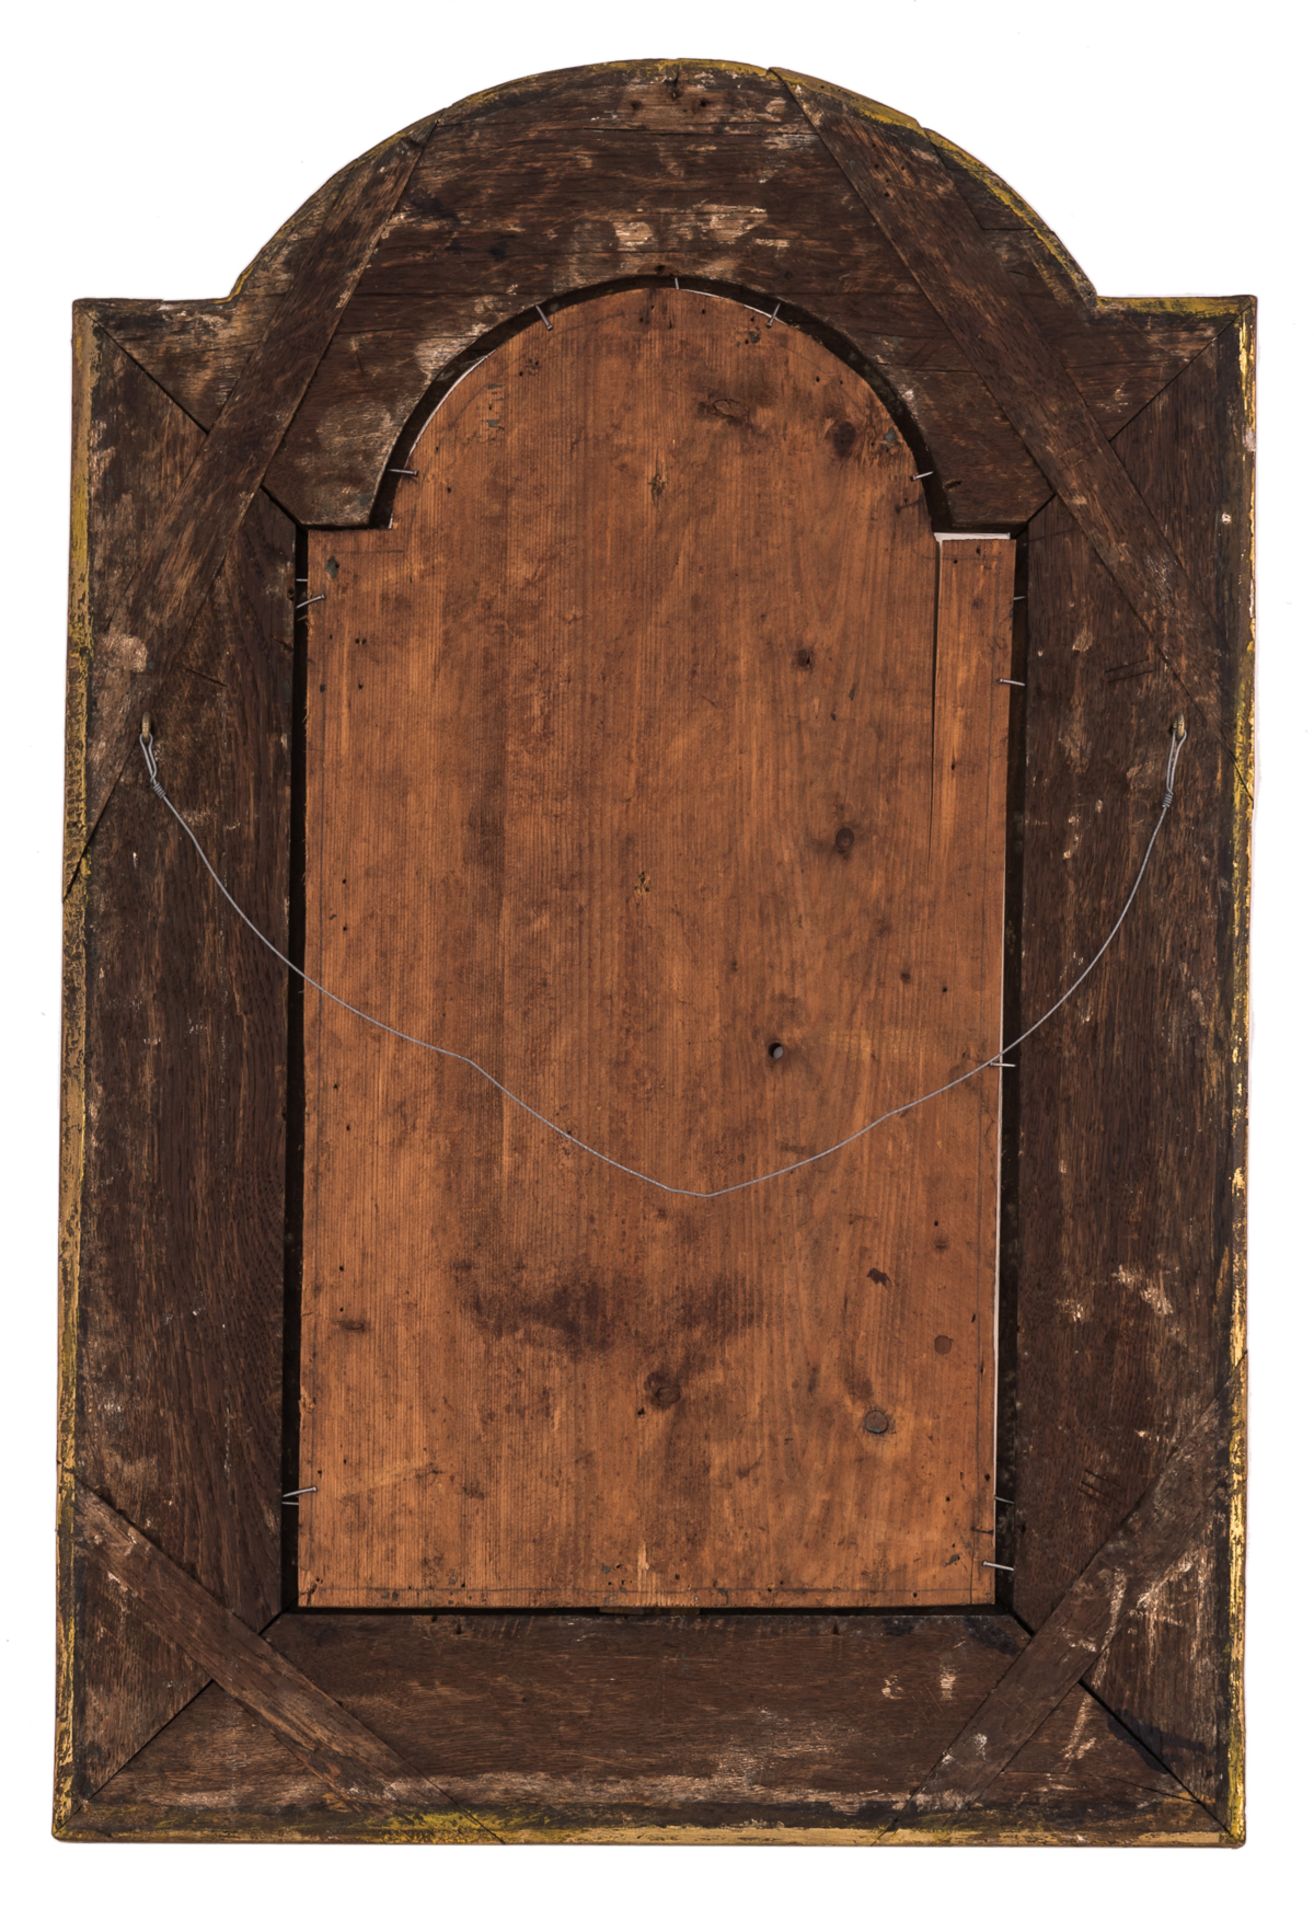 An 18thC ivory corpus Christi mounted in a gilt wooden frame, H 24 cm (corpus) - 44 x 66 cm (frame) - Bild 2 aus 2